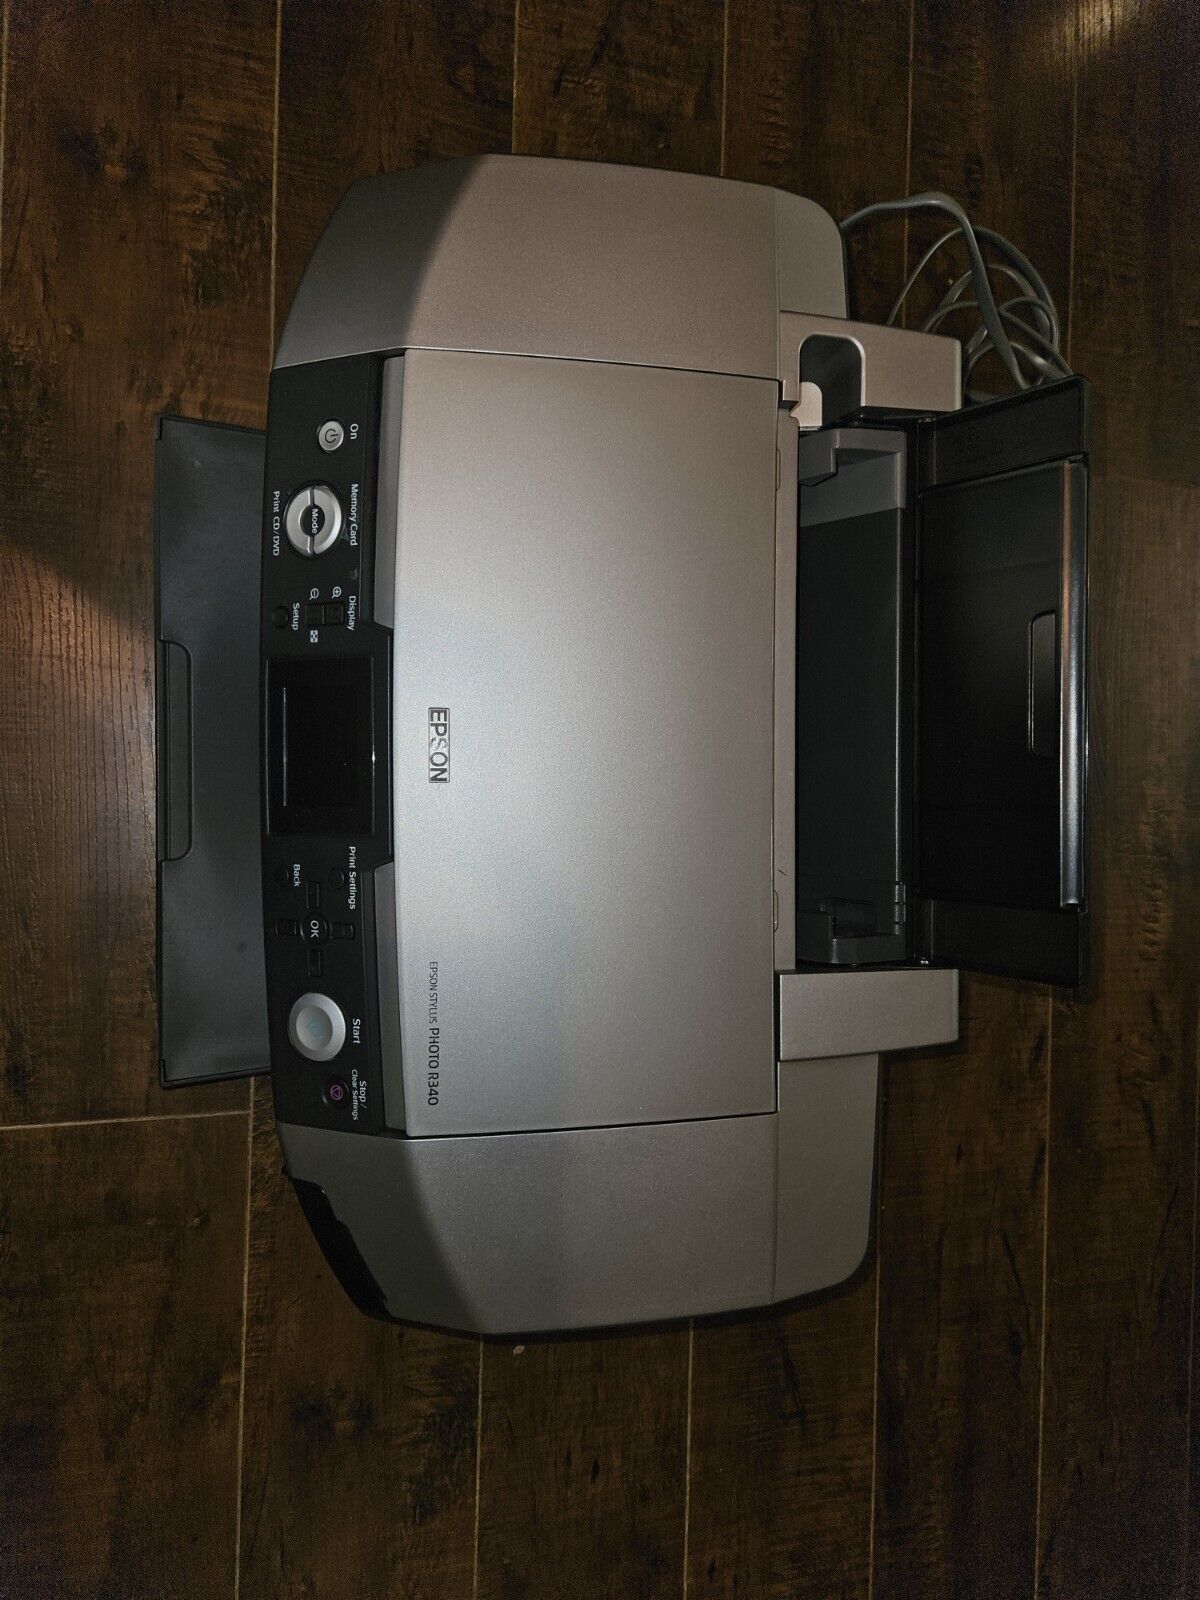 Epson Stylus Photo R340 Ink Jet Photo Printer With Original Box And CD Tray...